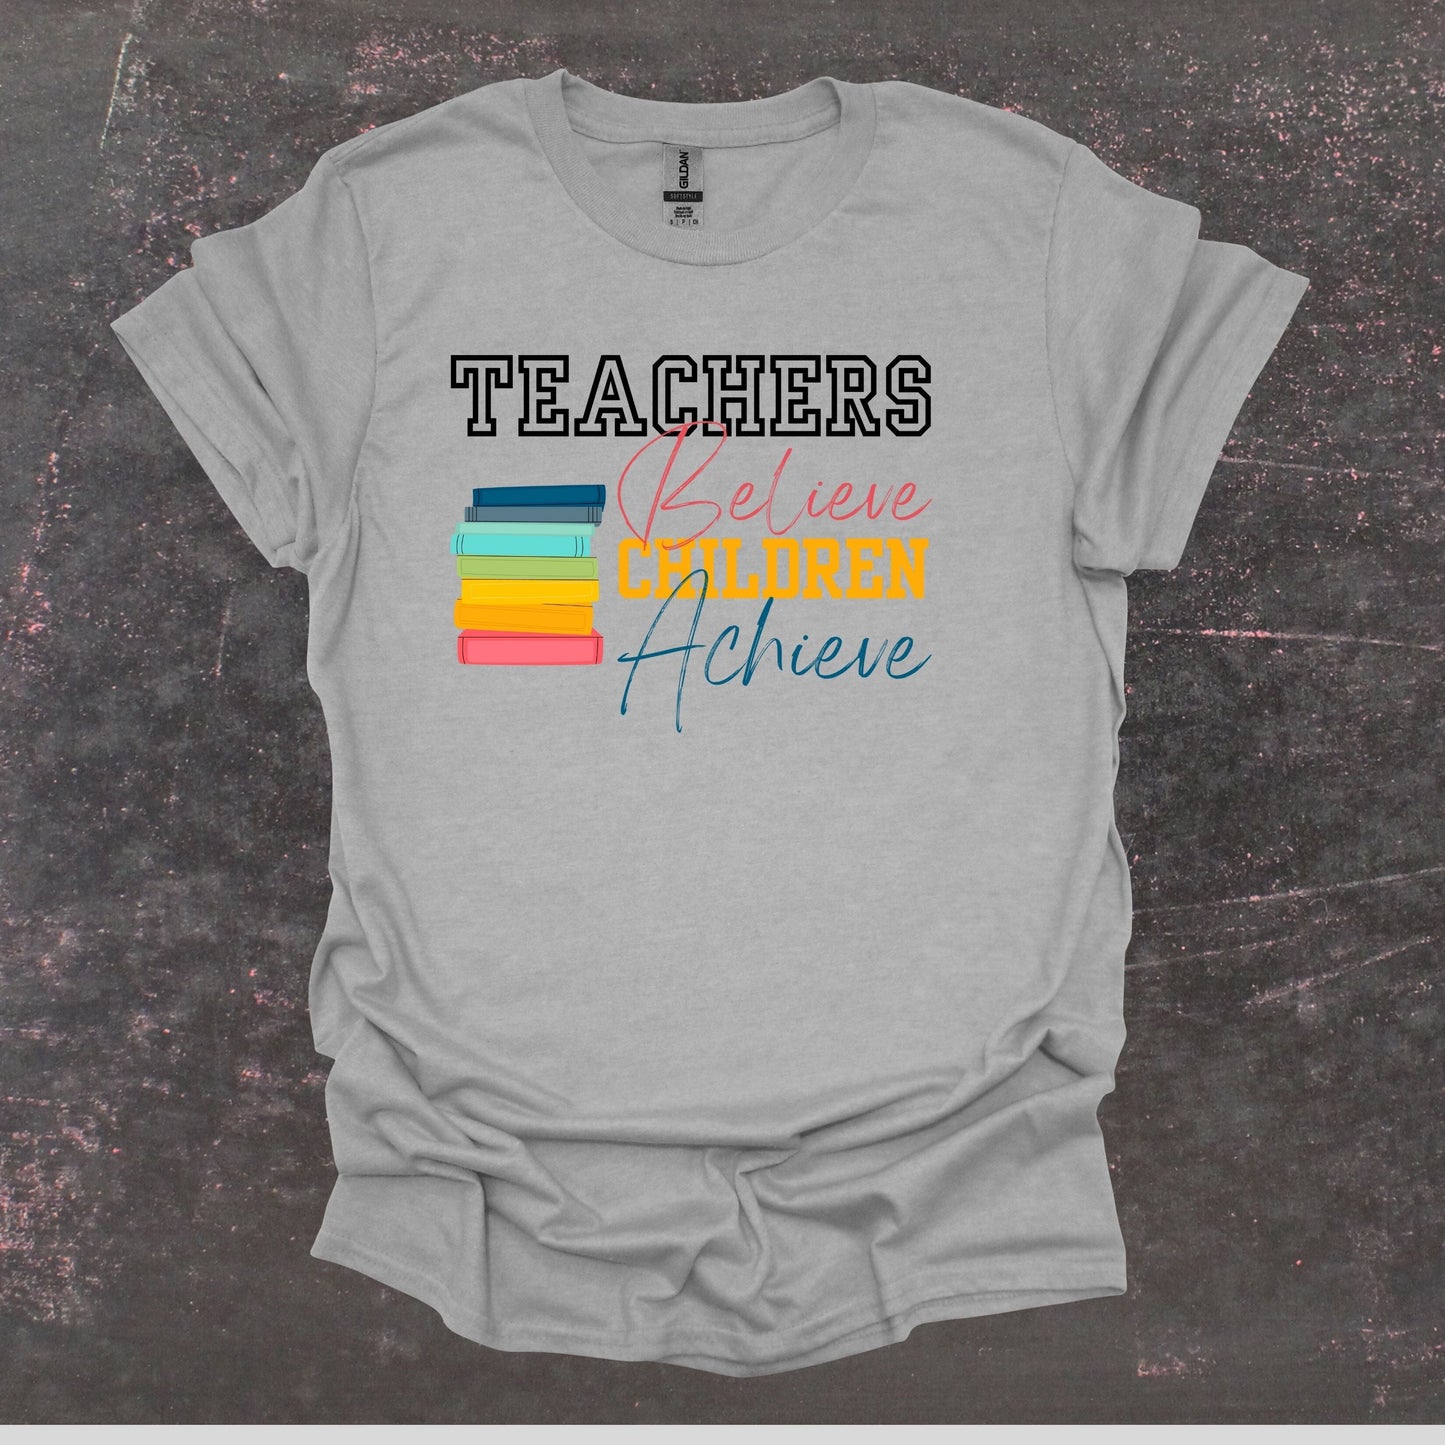 Teachers Believe Children Achieve - Teacher T Shirt - Adult Tee Shirts T-Shirts Graphic Avenue Sport Grey Adult Small 